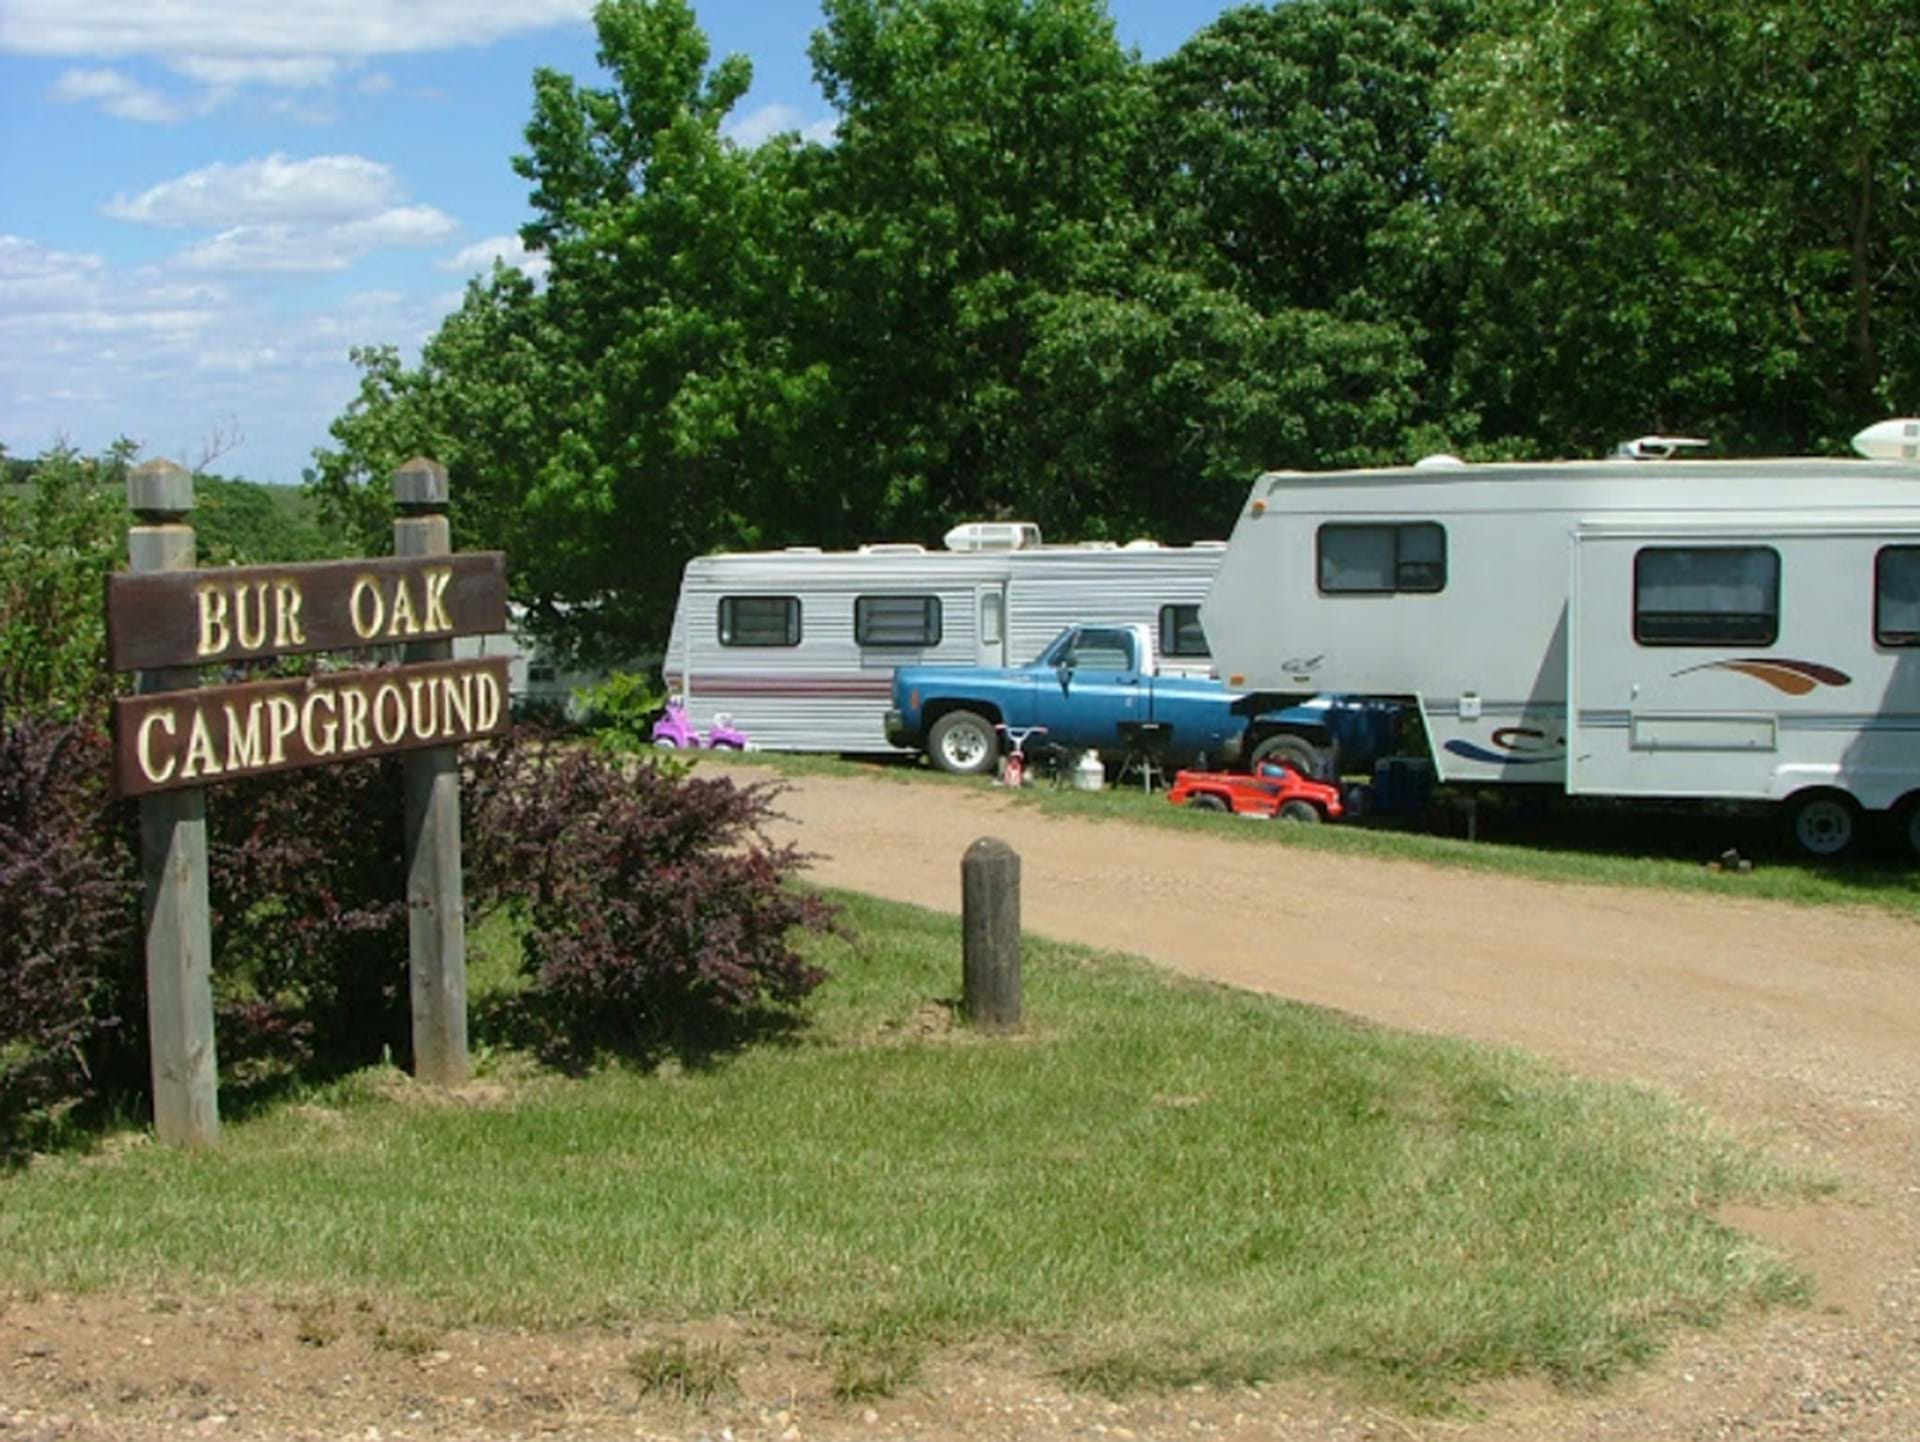 Burr Oak Campground